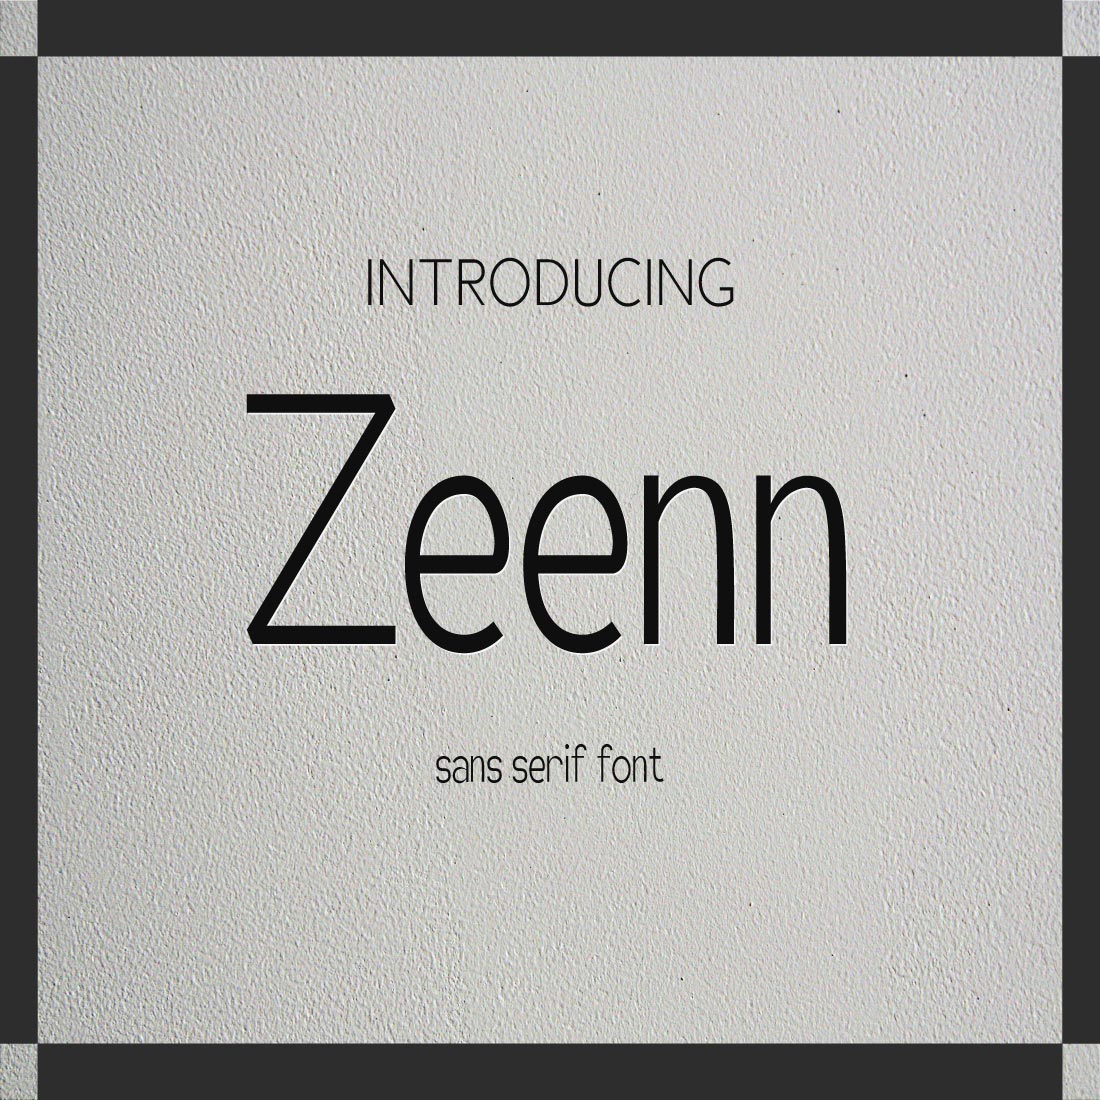 Zeenn | Sans Serif Font cover image.